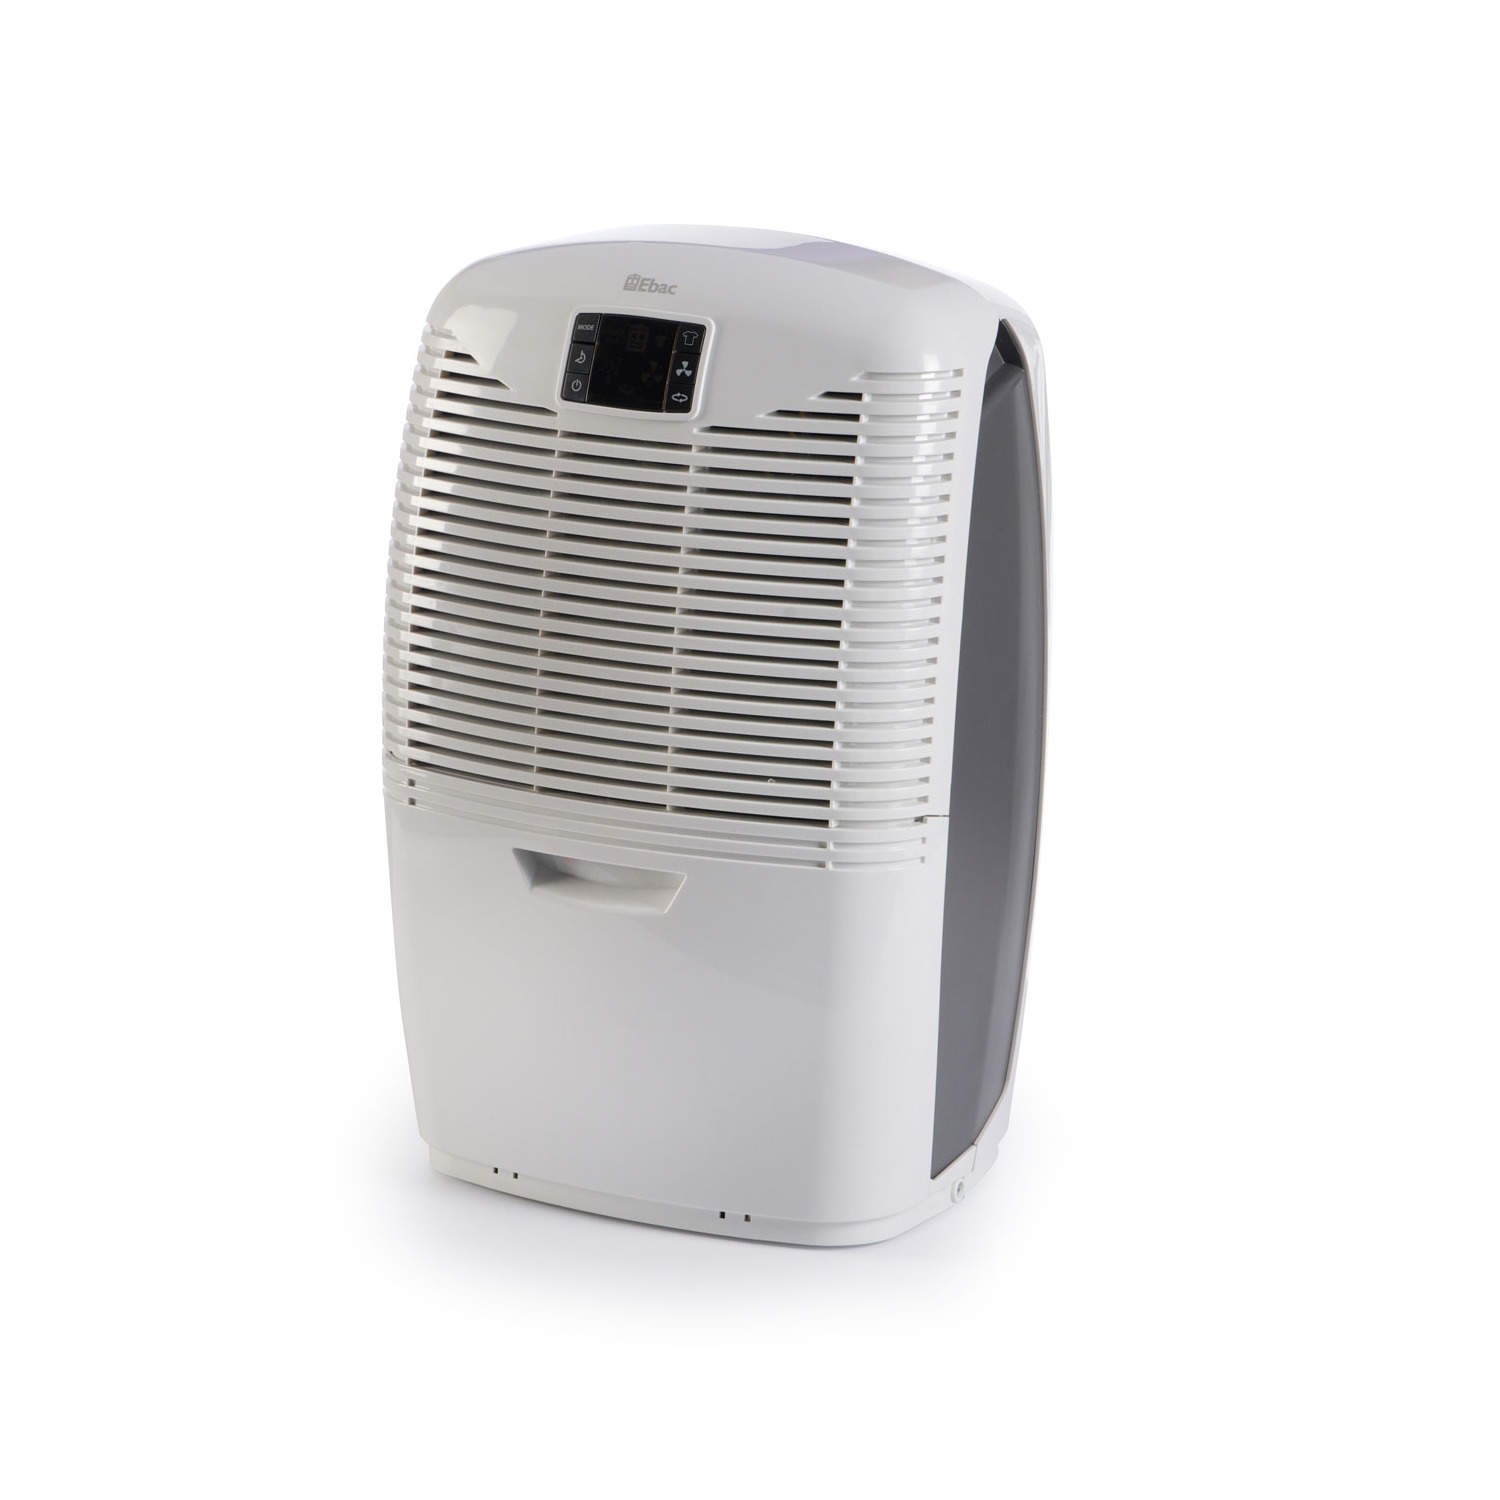 Ebac 3850E 21 Litre Dehumidifier with Air Purification and Laundry Mod